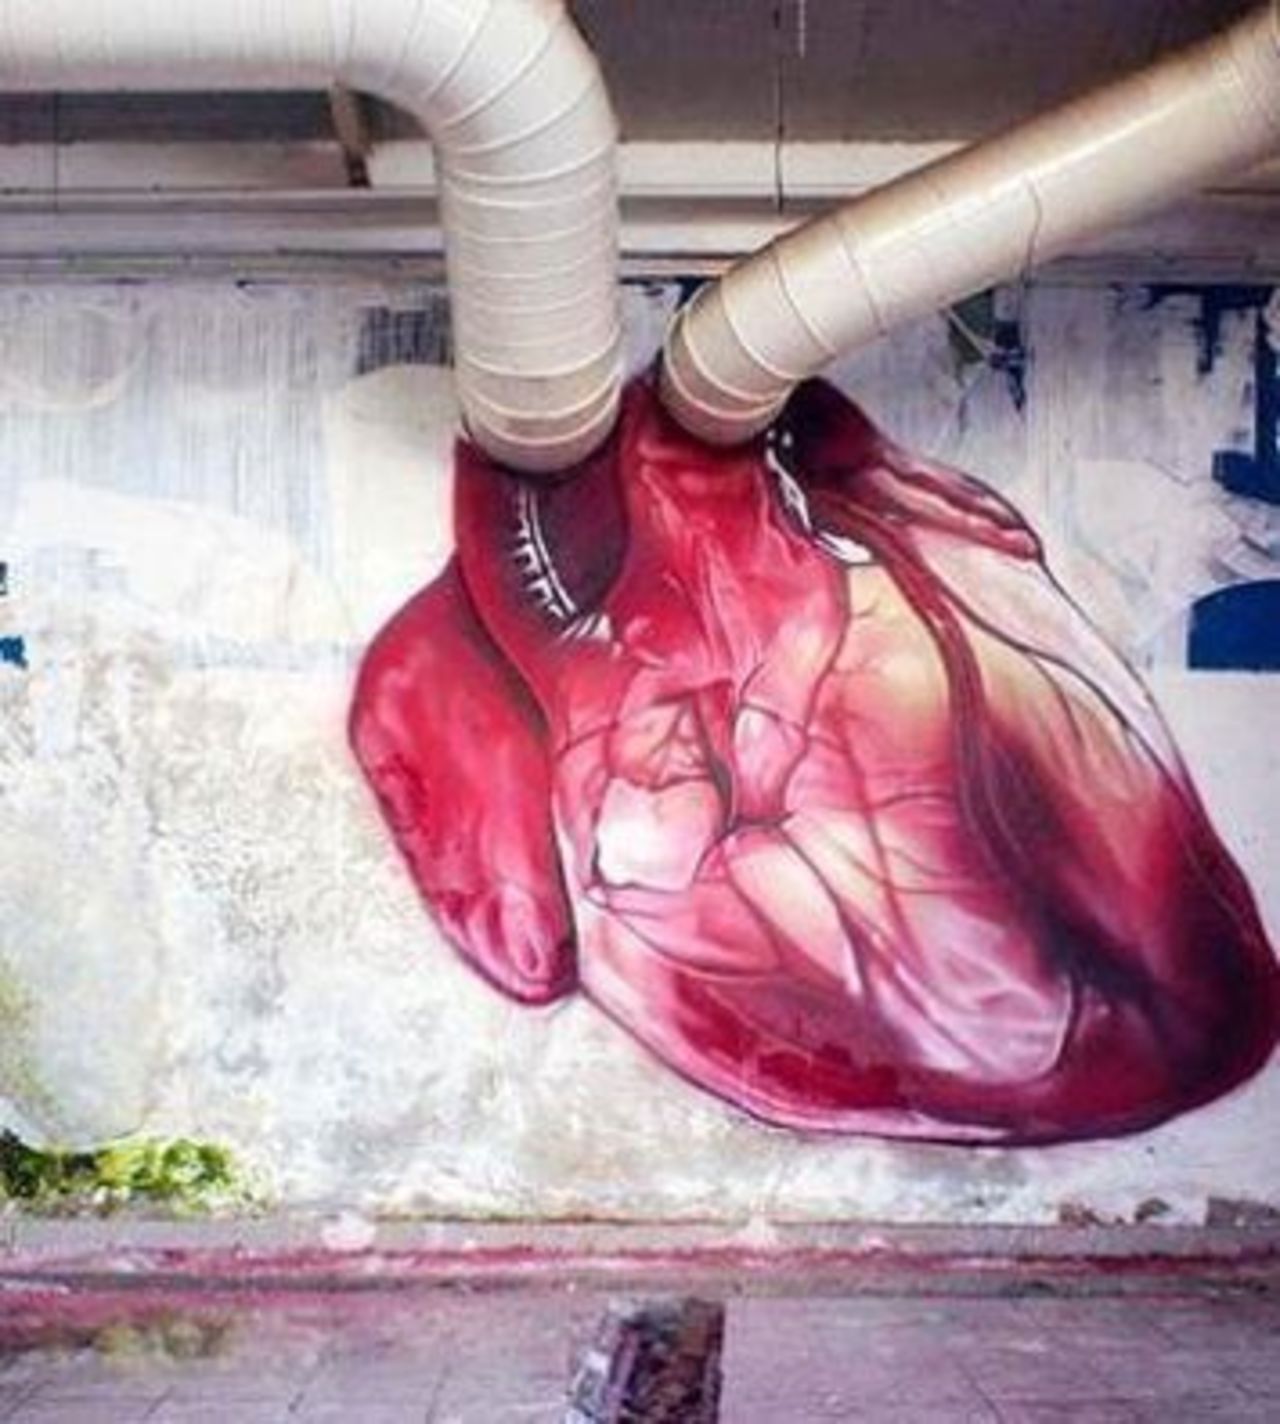 #Heart – Creative #Streetart | Be ▲rtist - Be ▲rt https://beartistbeart.com/2016/08/22/heart-creative-streetart/?utm_campaign=crowdfire&utm_content=crowdfire&utm_medium=social&utm_source=twitter https://t.co/wuW9eZGAZN